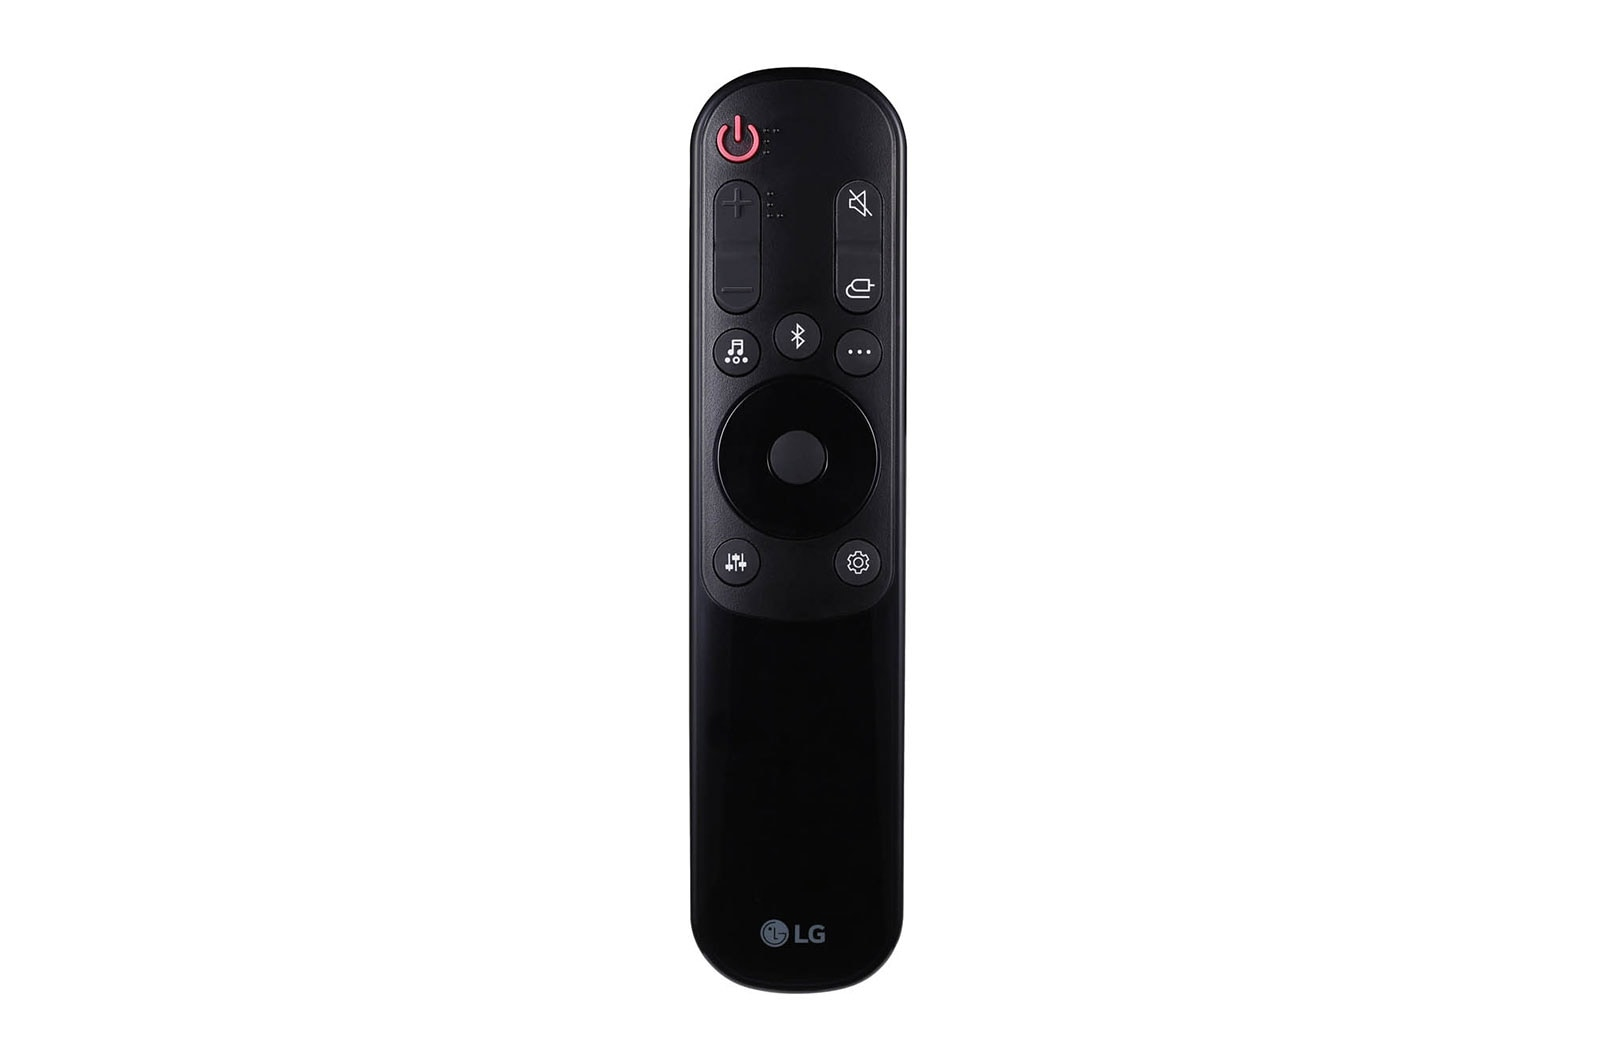 LG DSP9YA altoparlante soundbar Nero 5.1.2 canali 520 W [DSP9YA]